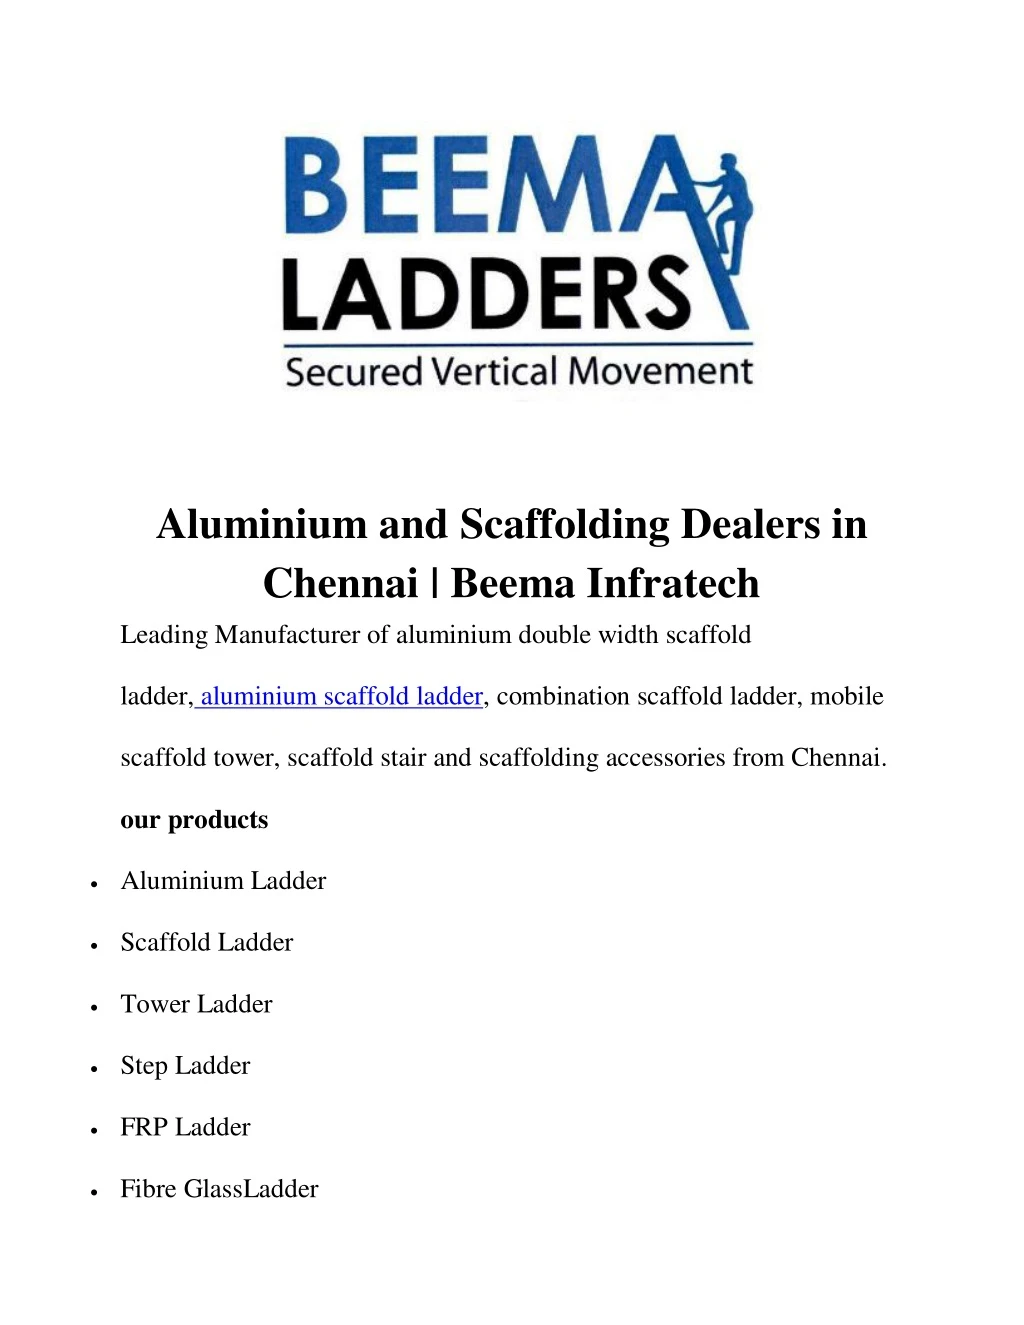 aluminium and scaffolding dealers in chennai